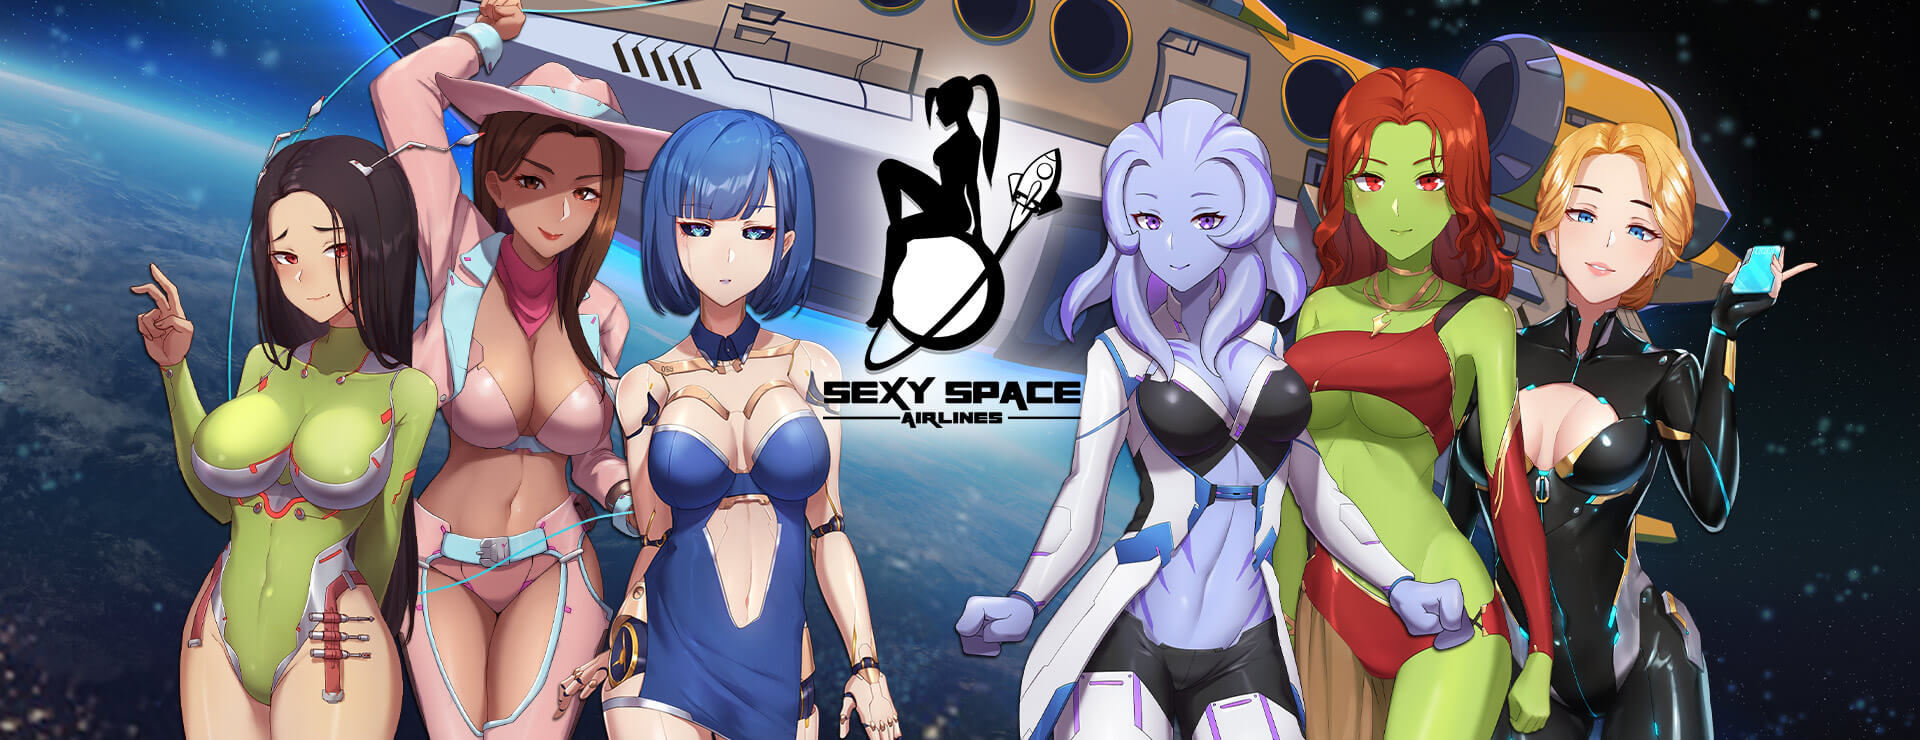 Sexy Space Airlines - Zwanglos  Spiel